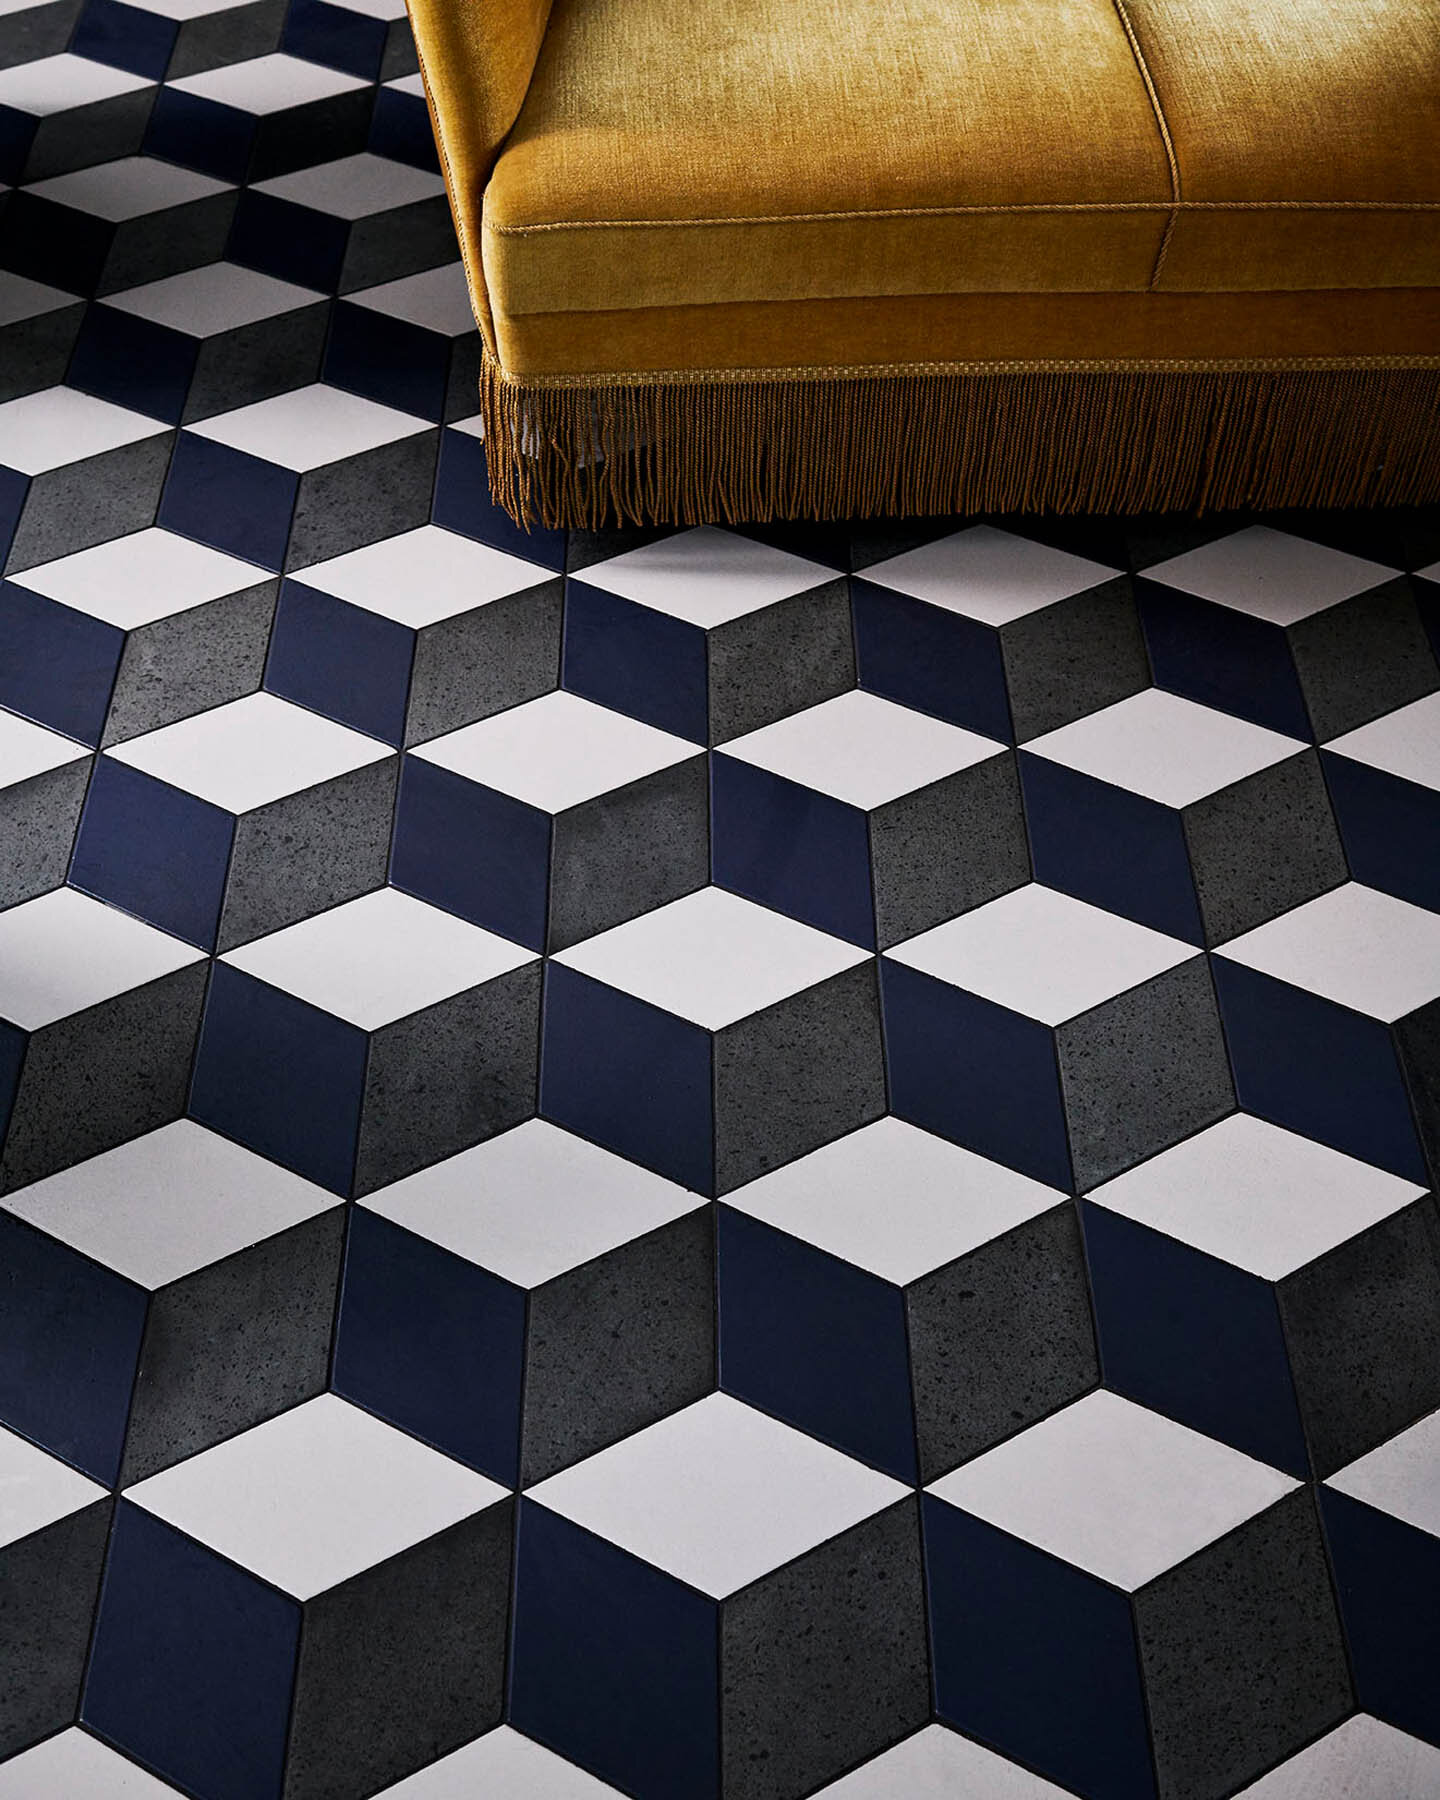 Floor with lava stone tiles in rombo format glazed with 'White Tail Matt'